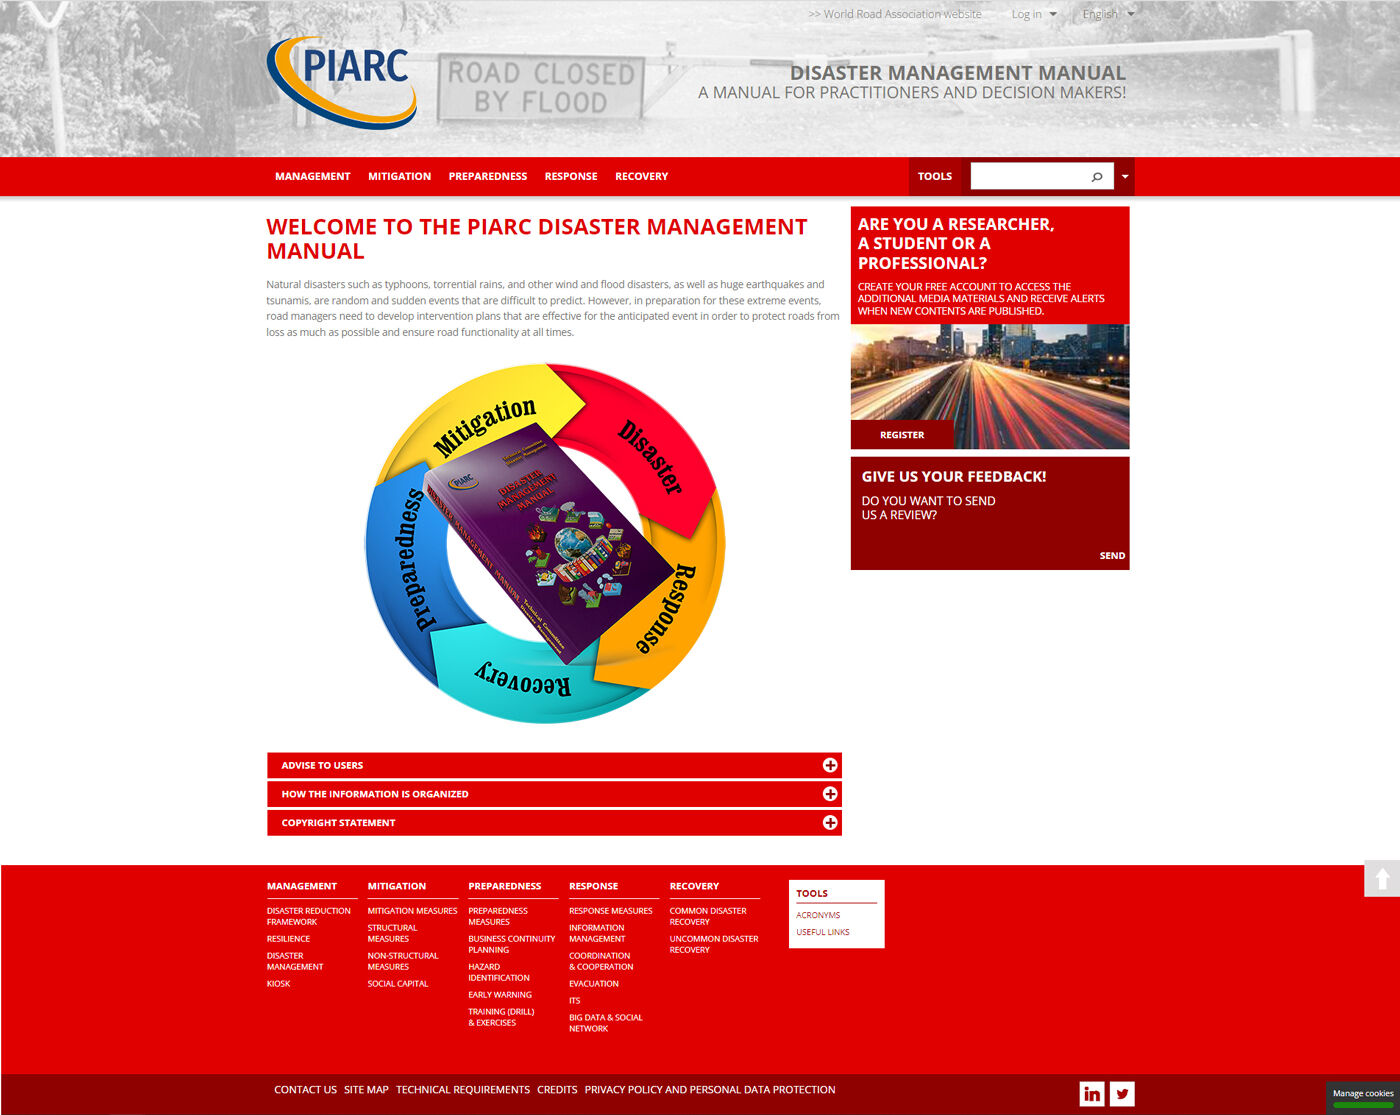 Road Asset Management Manual - World Road Association